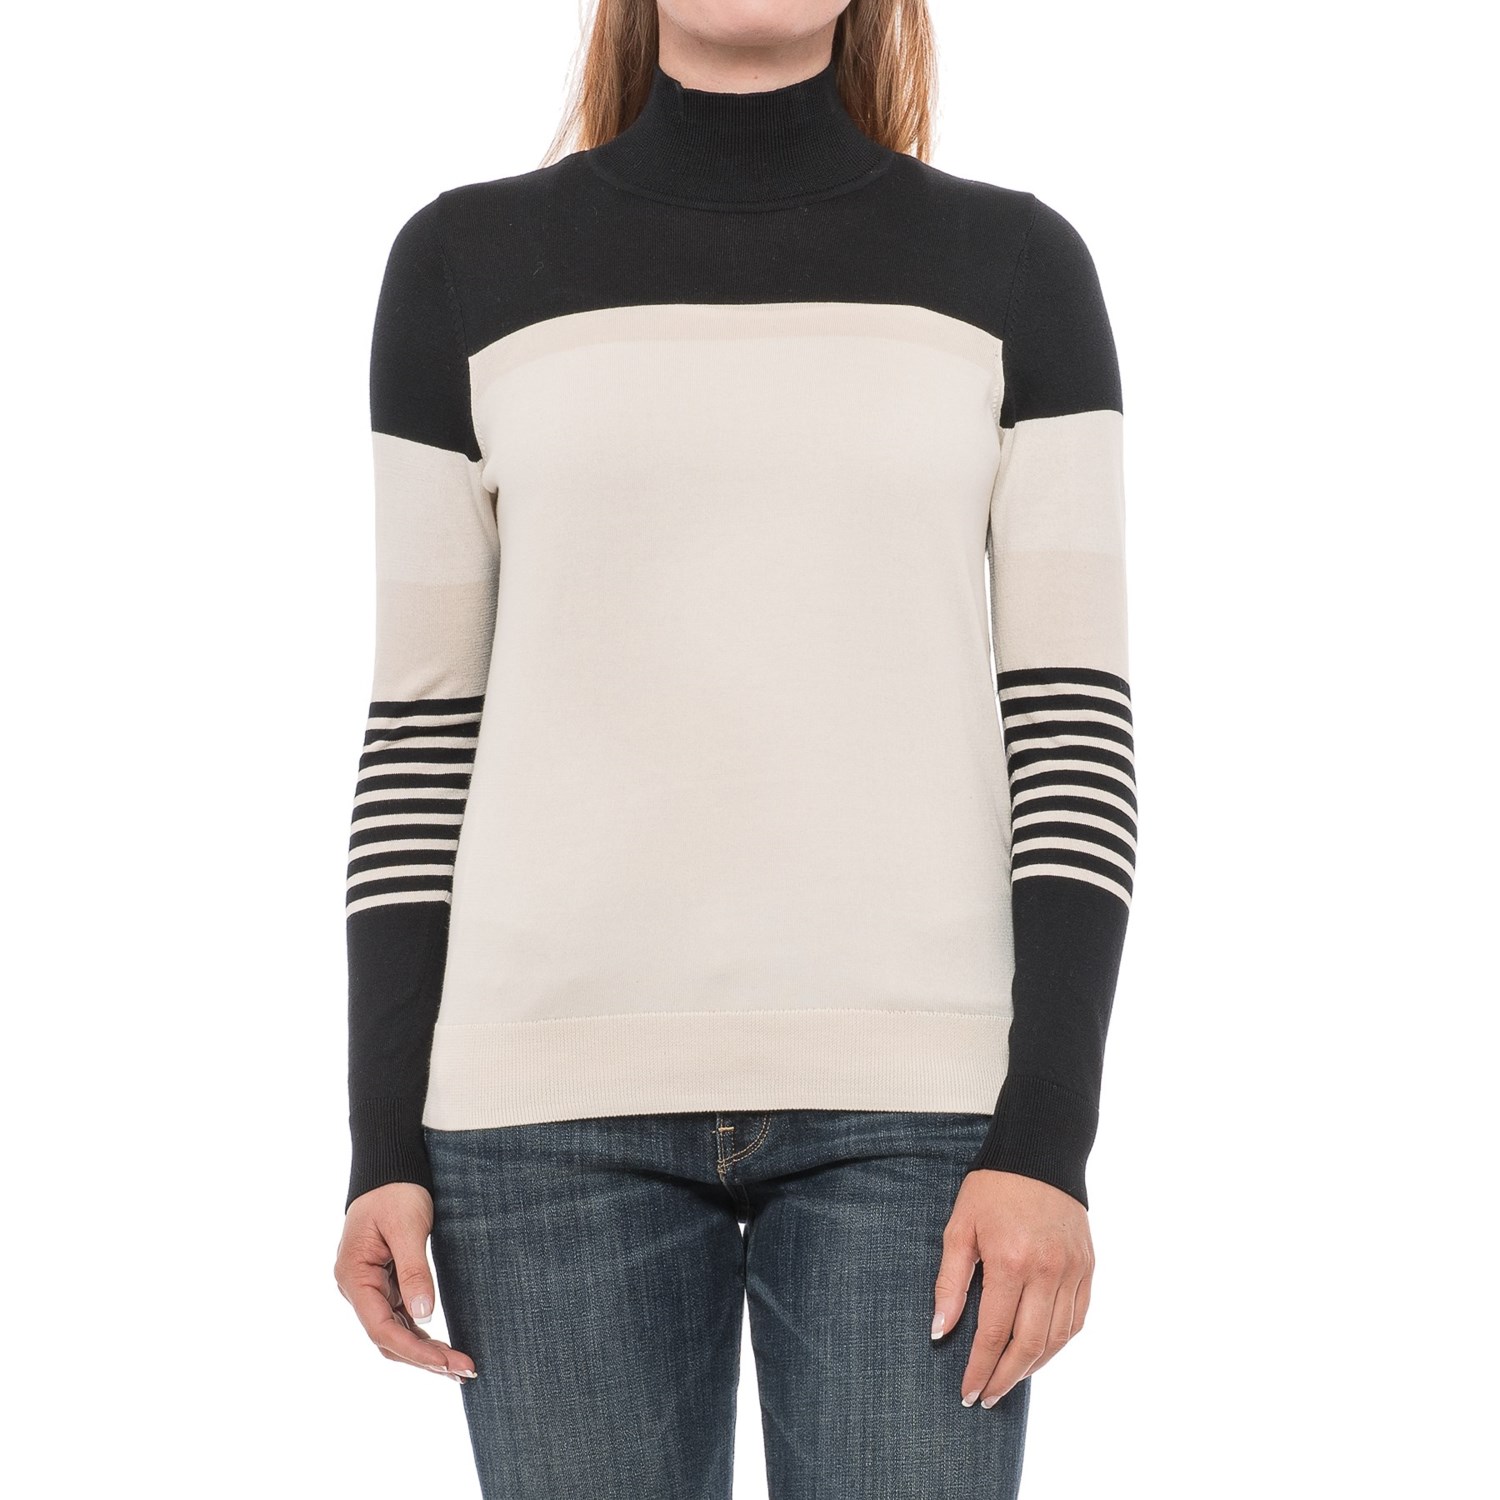 August Silk Striped Turtleneck Sweater (For Women)